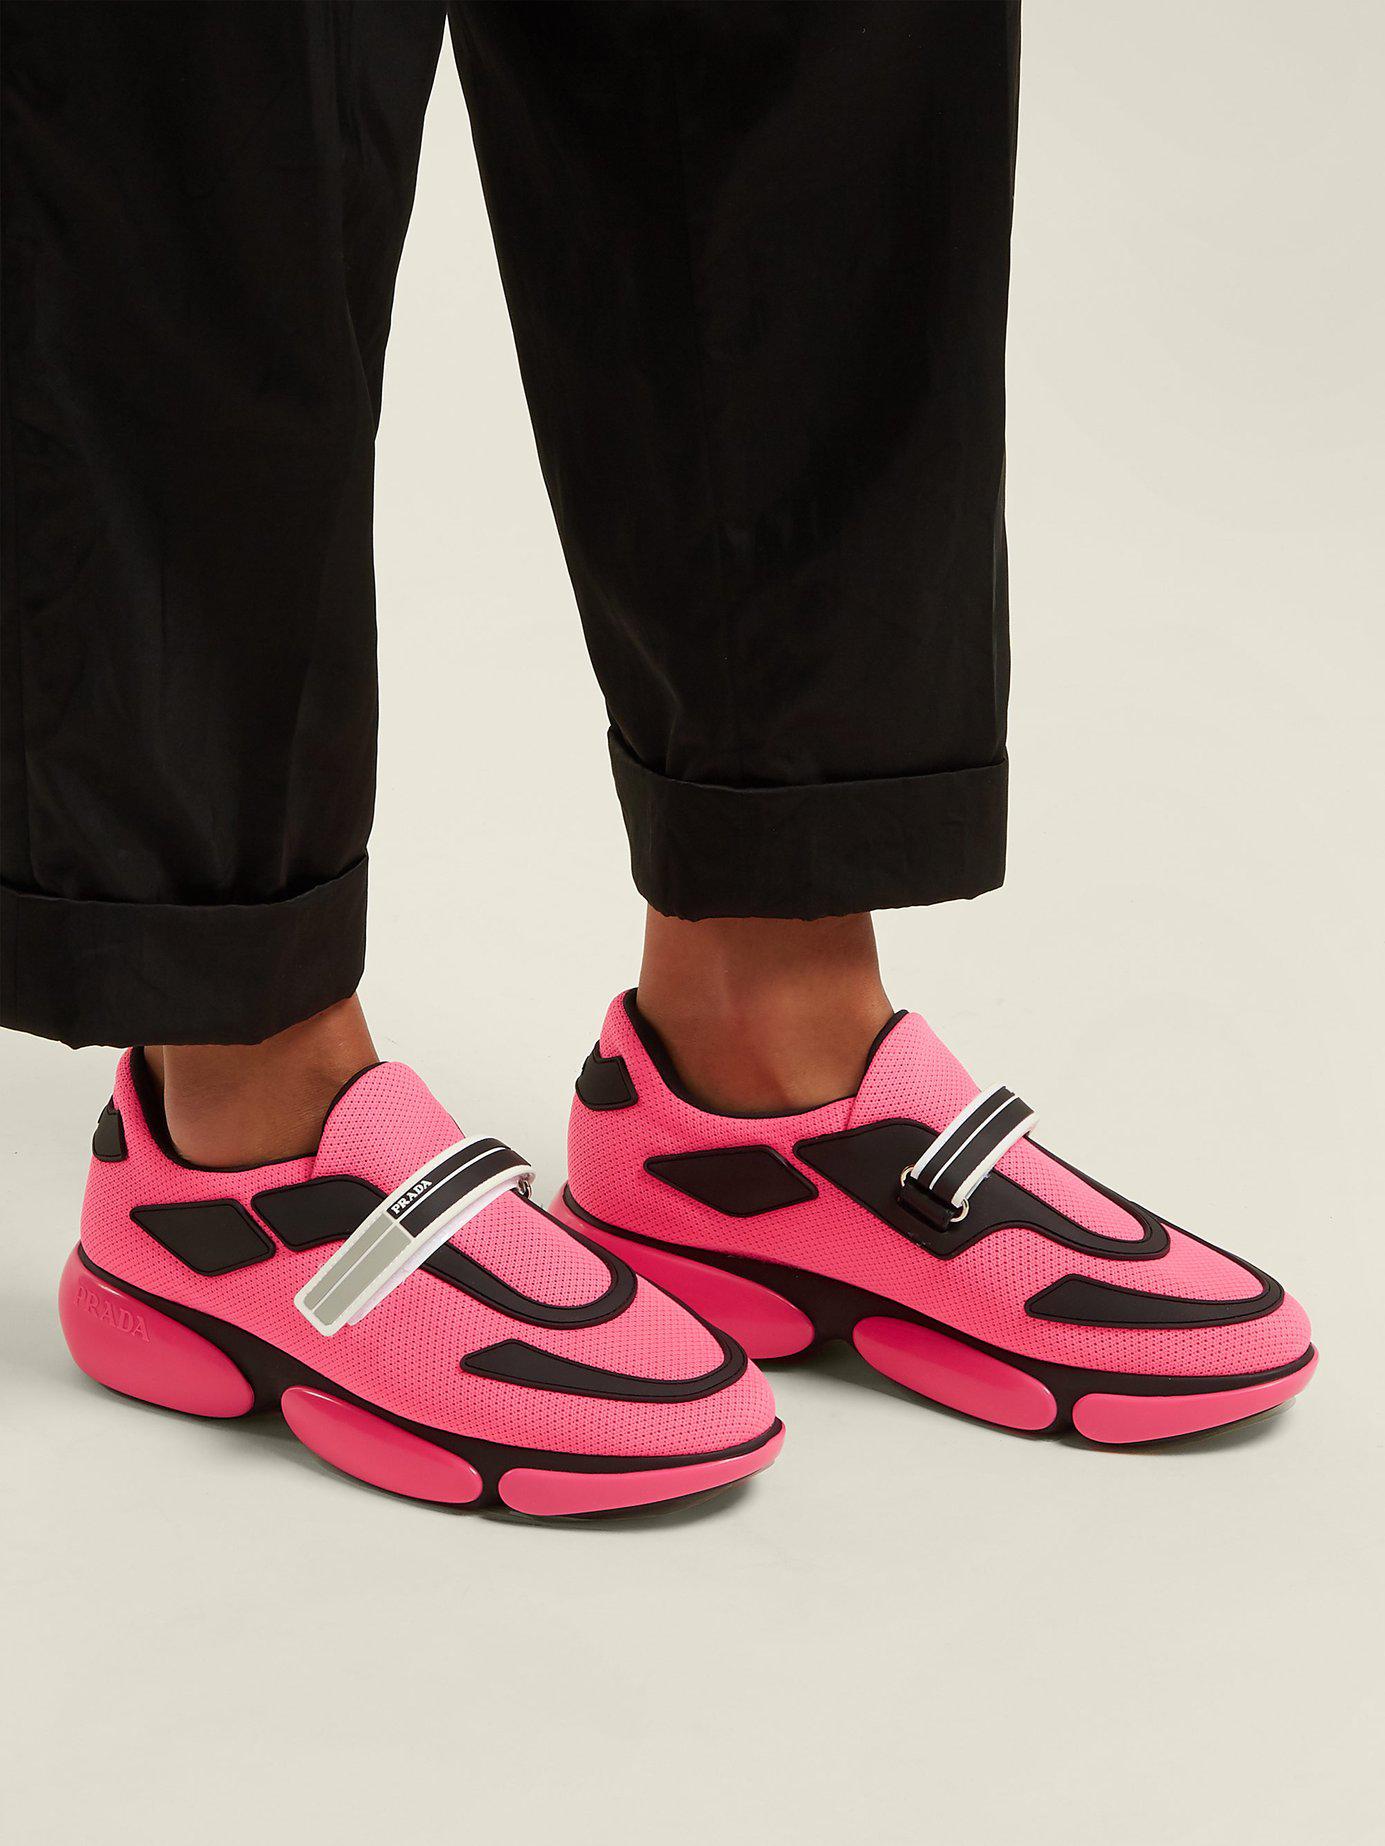 Prada Cloudbust Nylon Trainers in Pink | Lyst